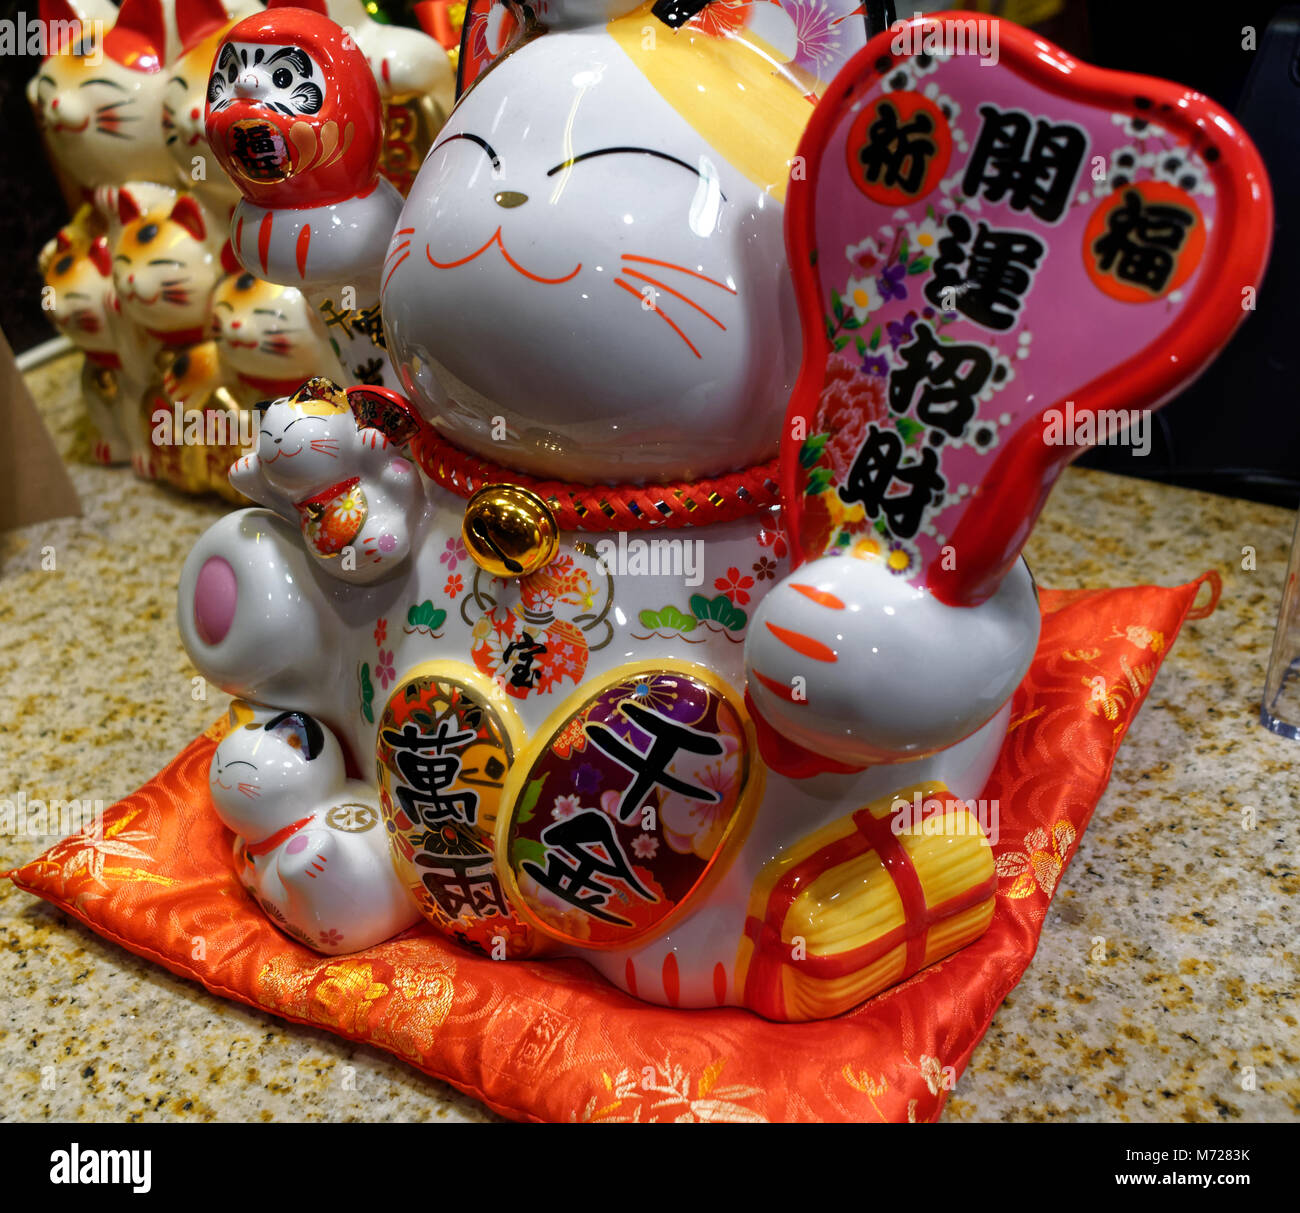 Maneki Neko lucky fortune cats on display at a restaurant Stock Photo